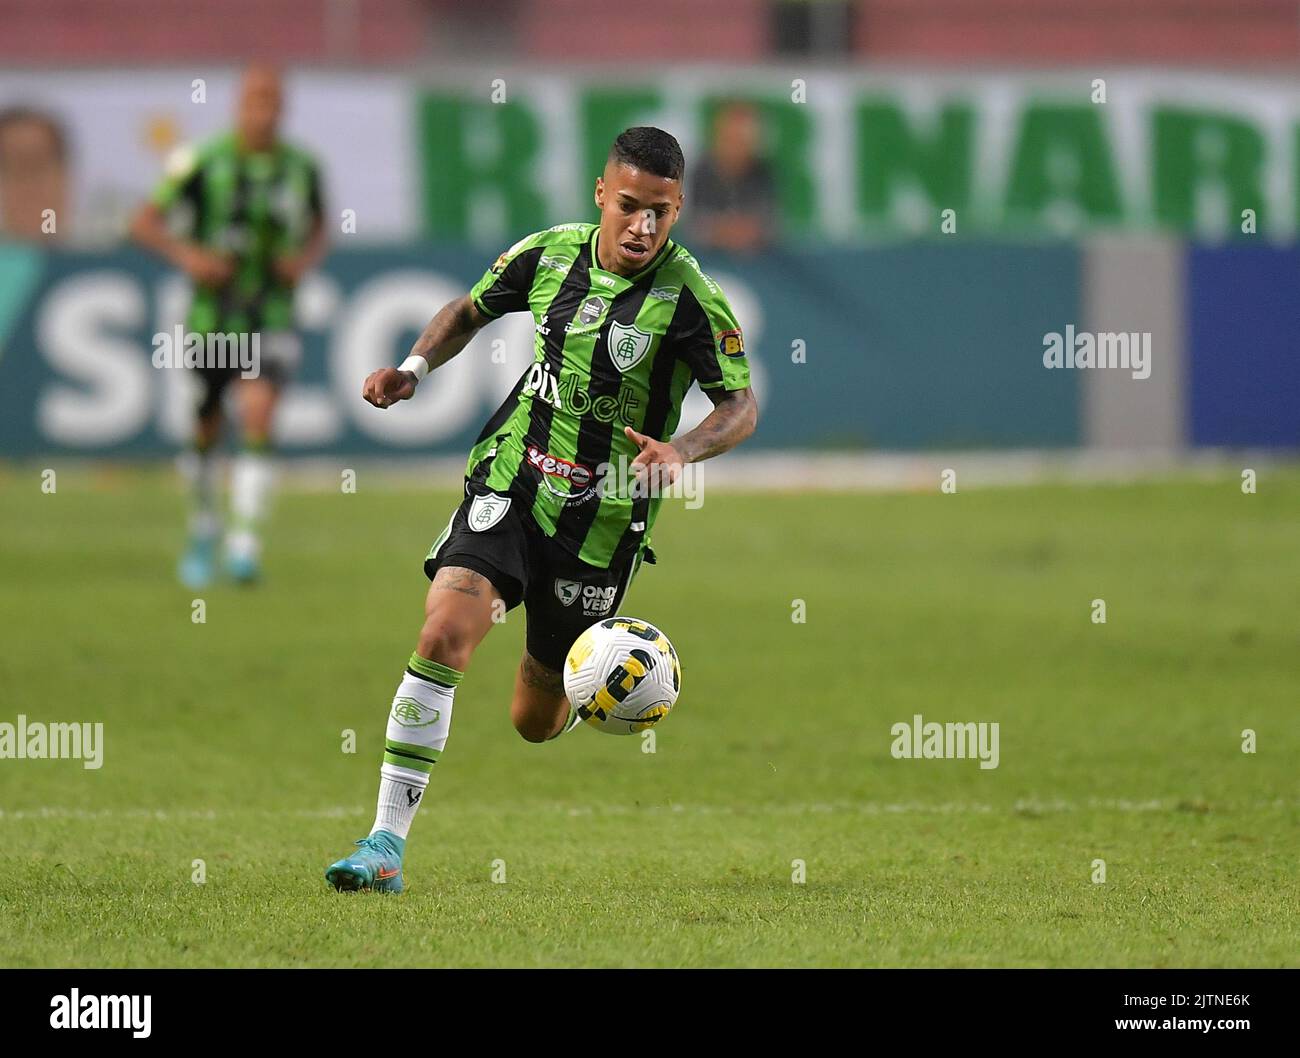 Futebol brasileirao league hi-res stock photography and images - Alamy